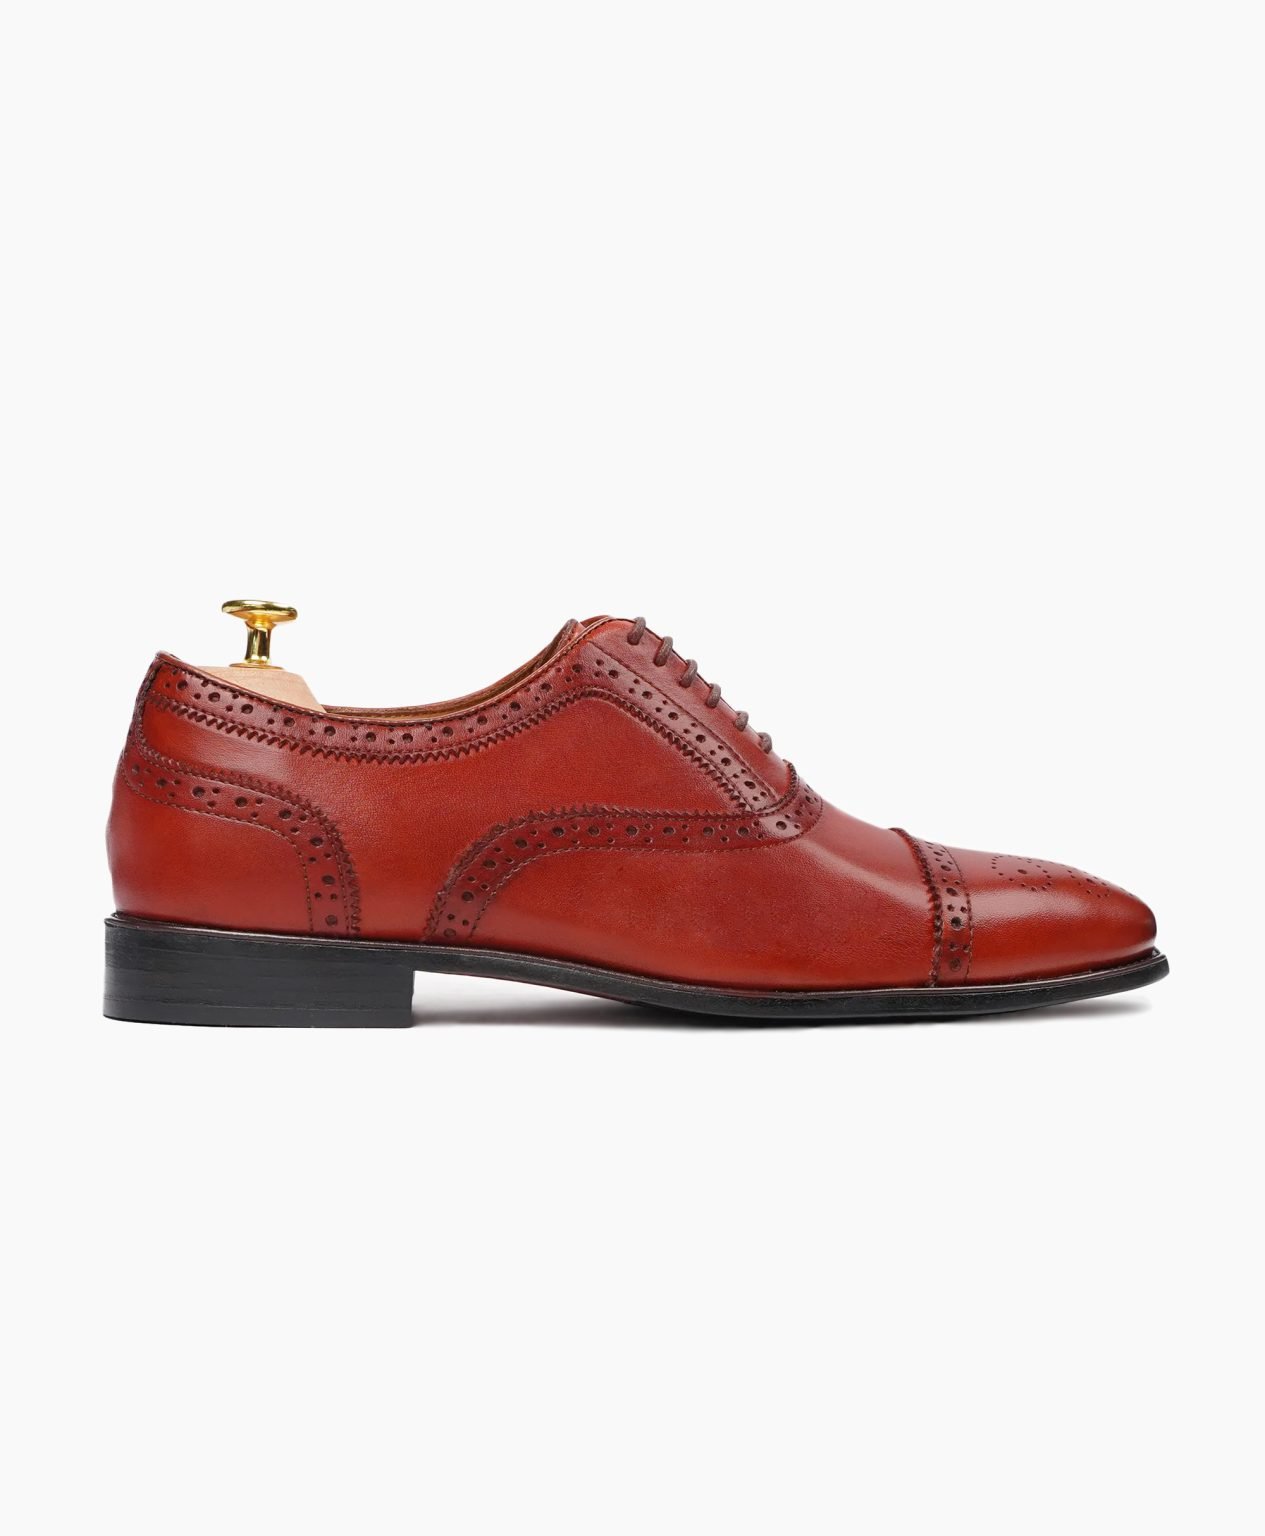 saltash-oxford-orange-tan-leather-shoes-image201